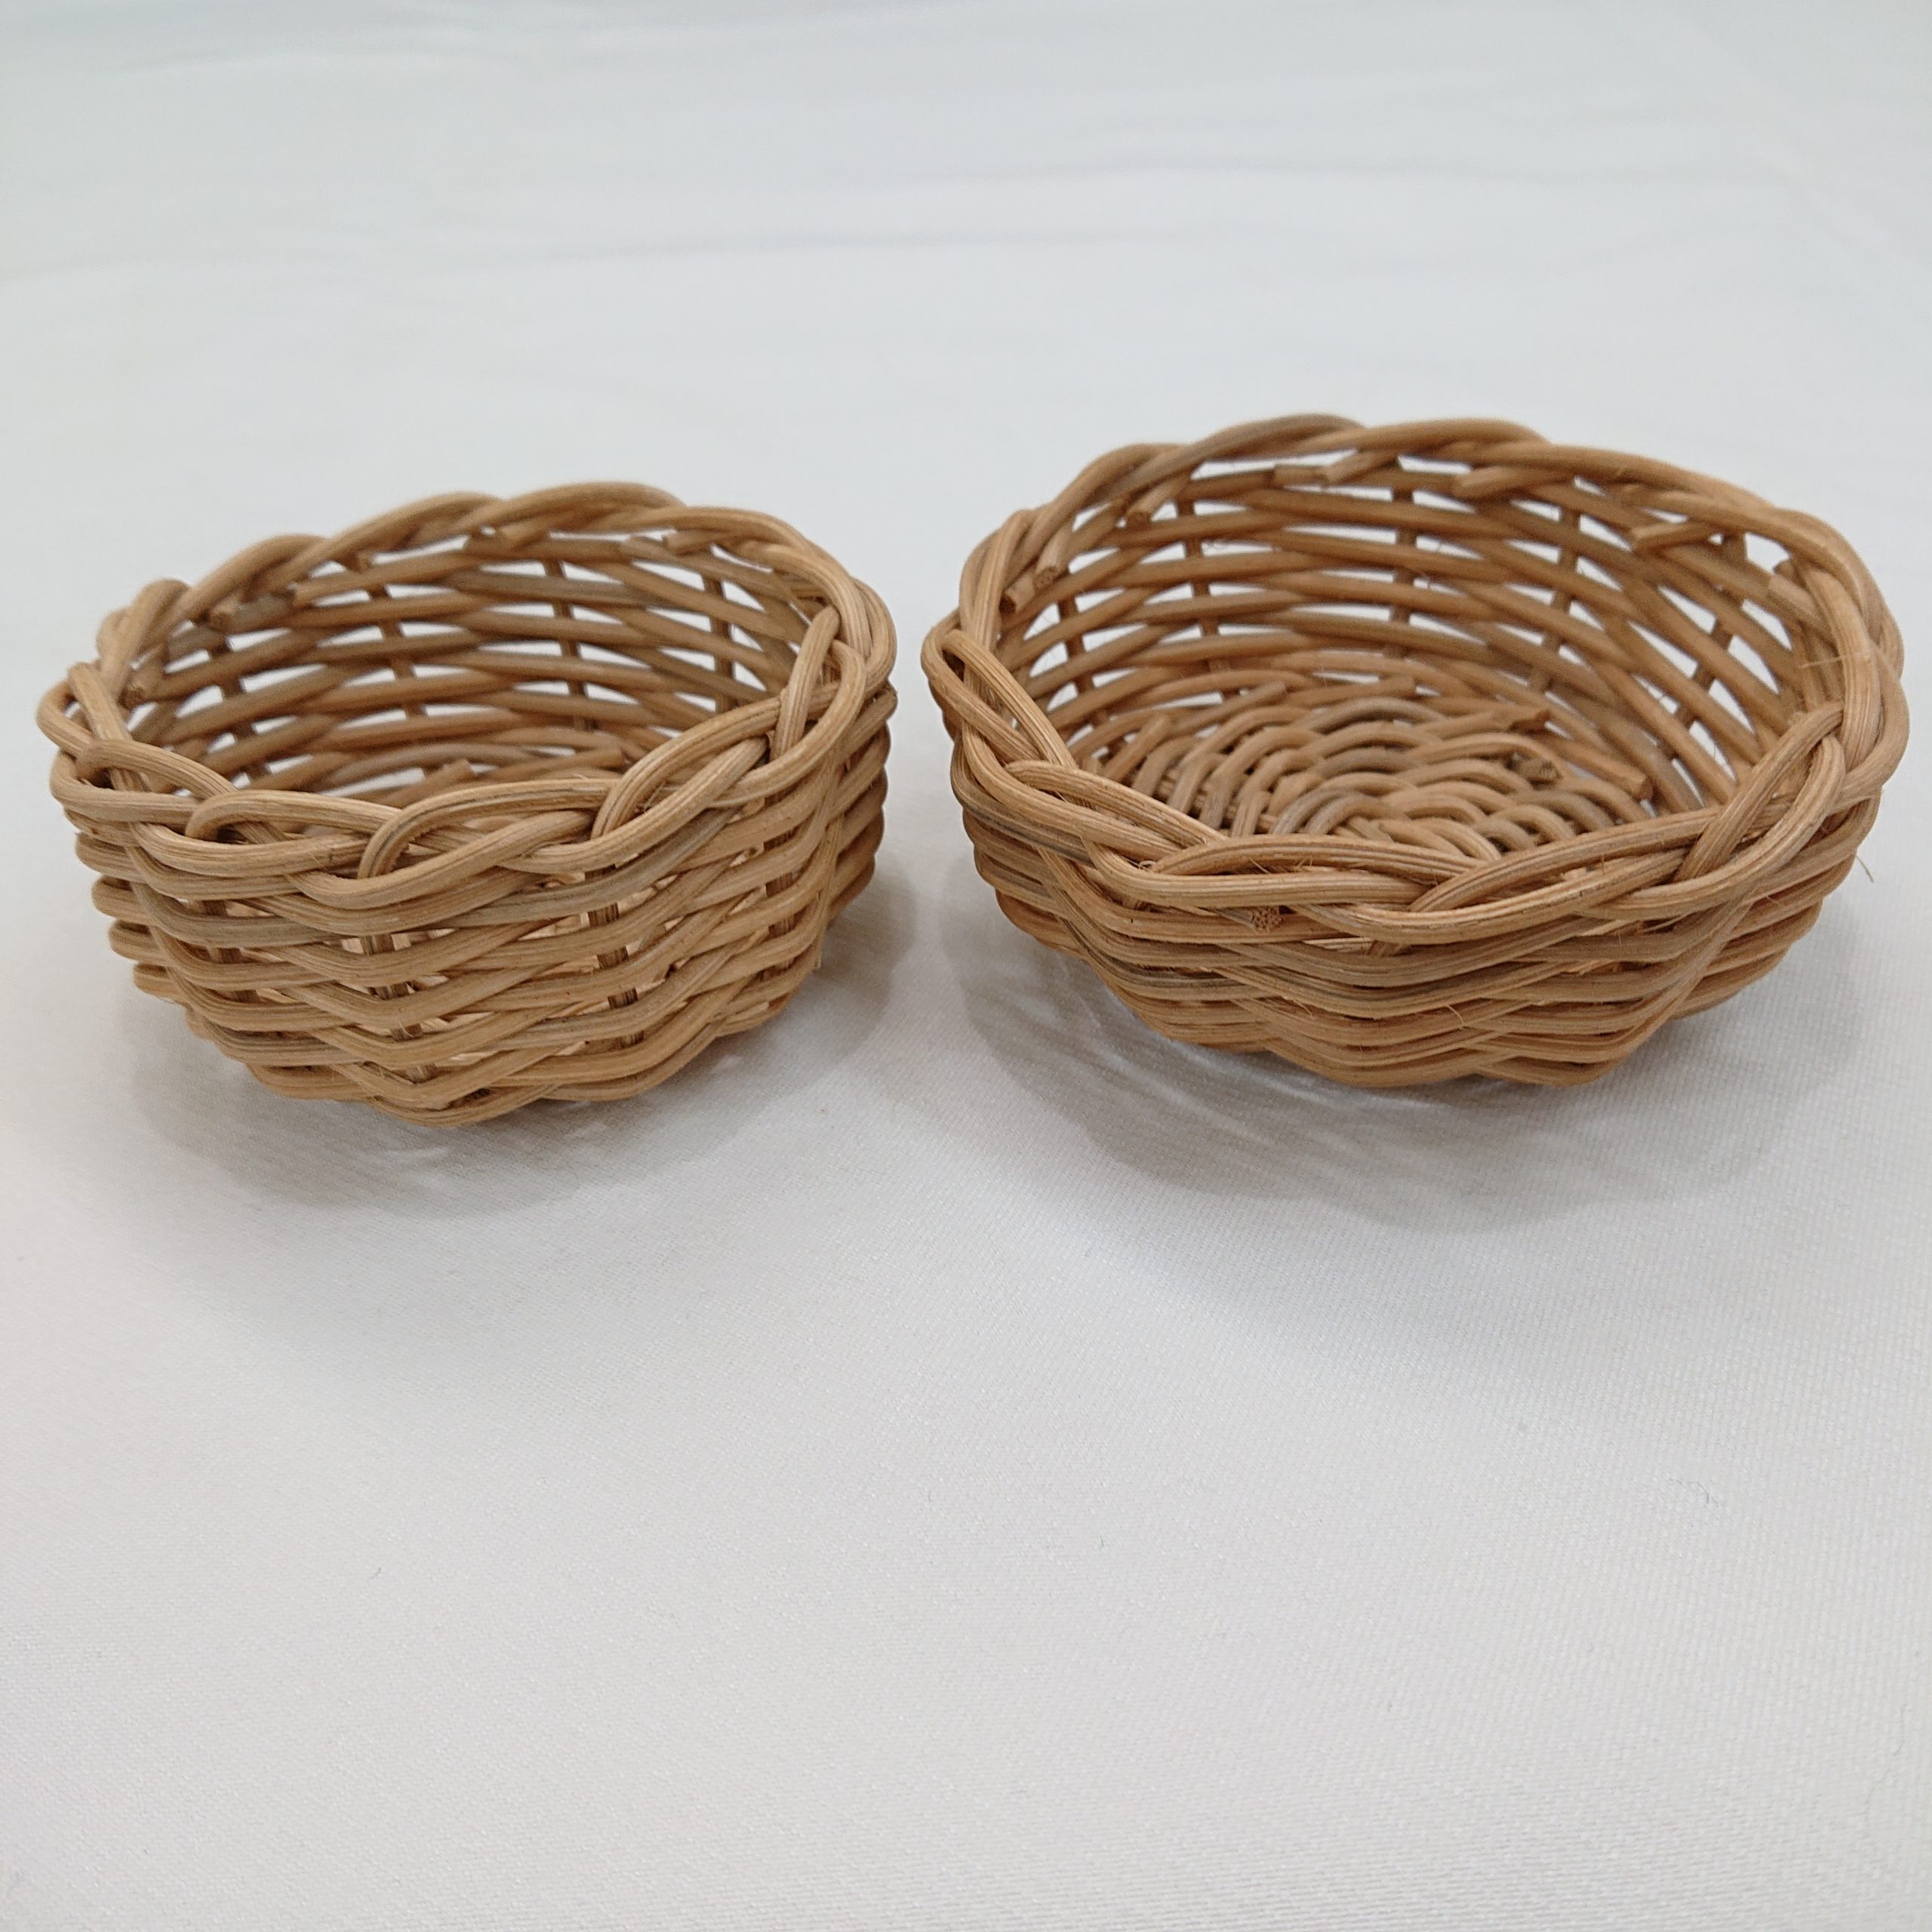 【BasketMoon×伊吹広子】 かごと編み地を編むピンクッション（土曜午前クラス）